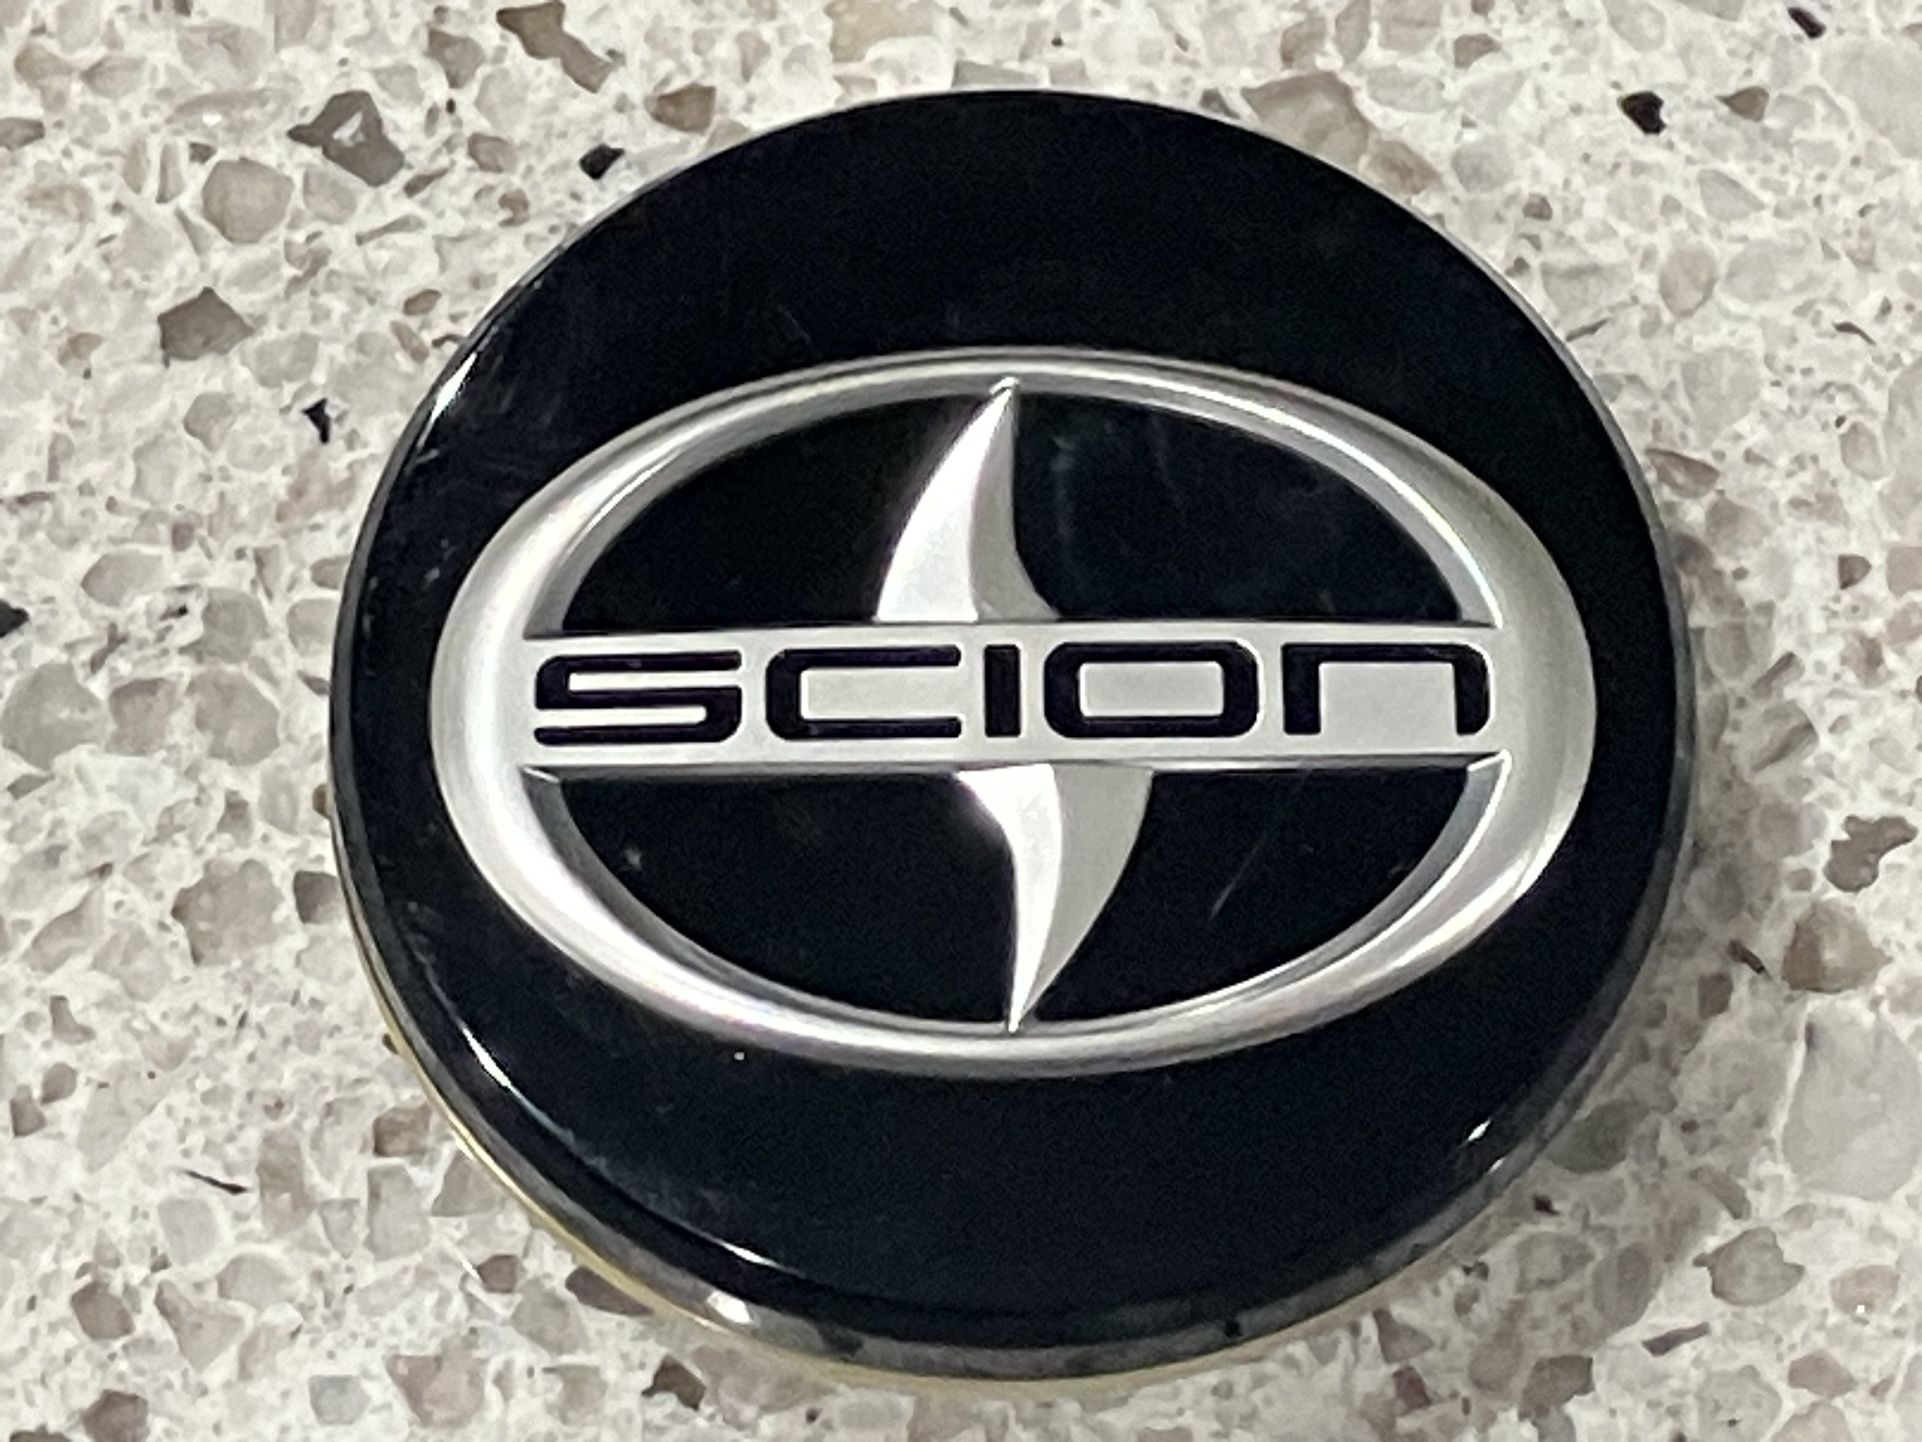 All 4! Scion FRS 2013-2016 Center Wheel Caps